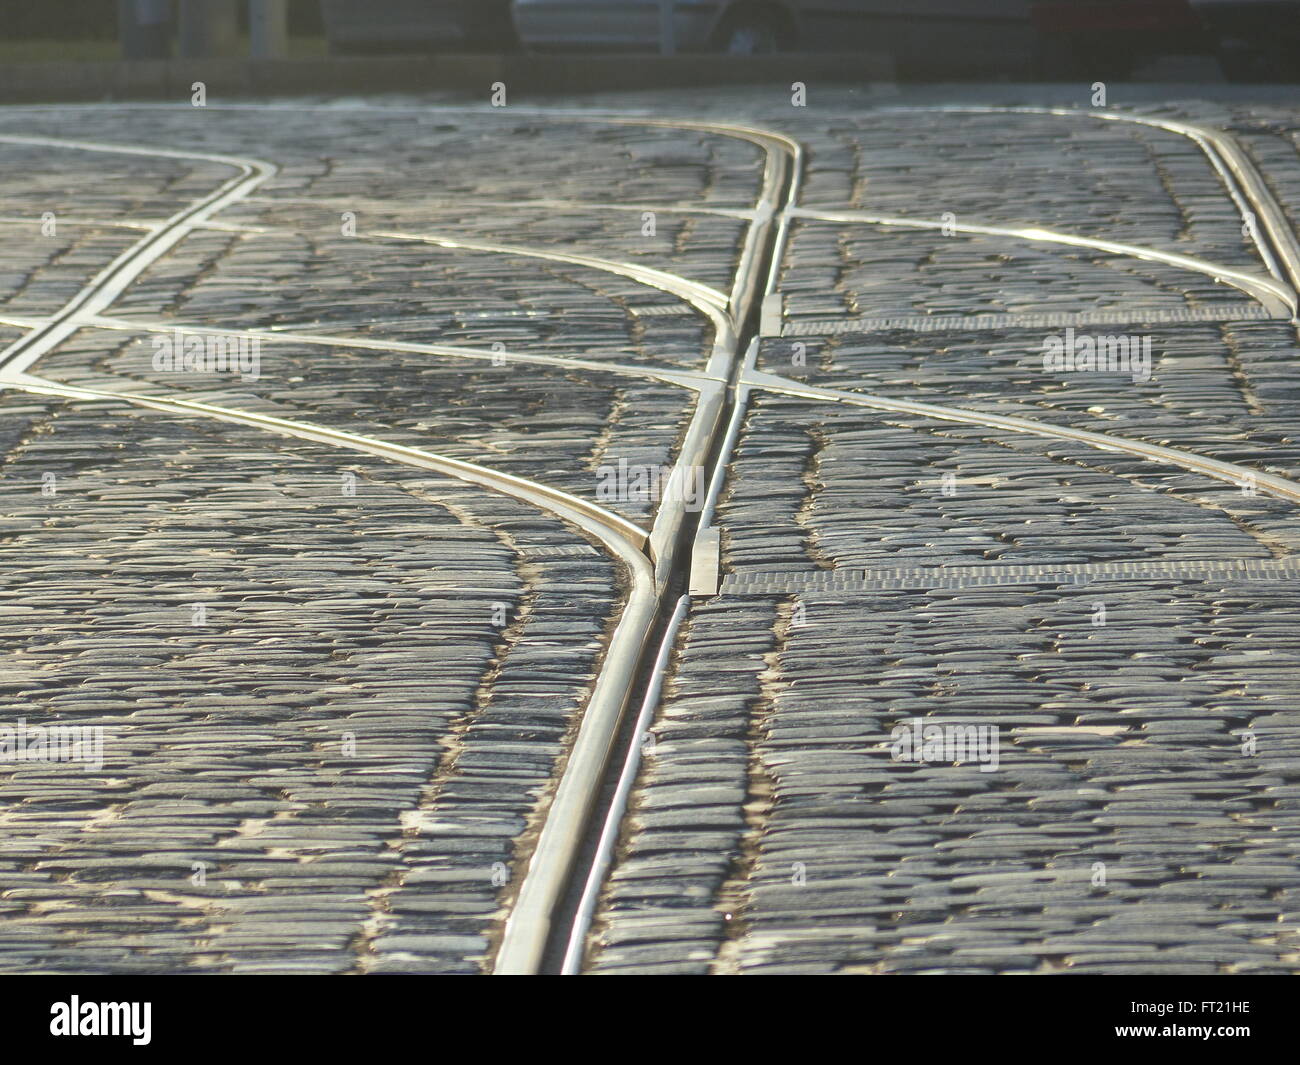 Street car tracks Stock Photo